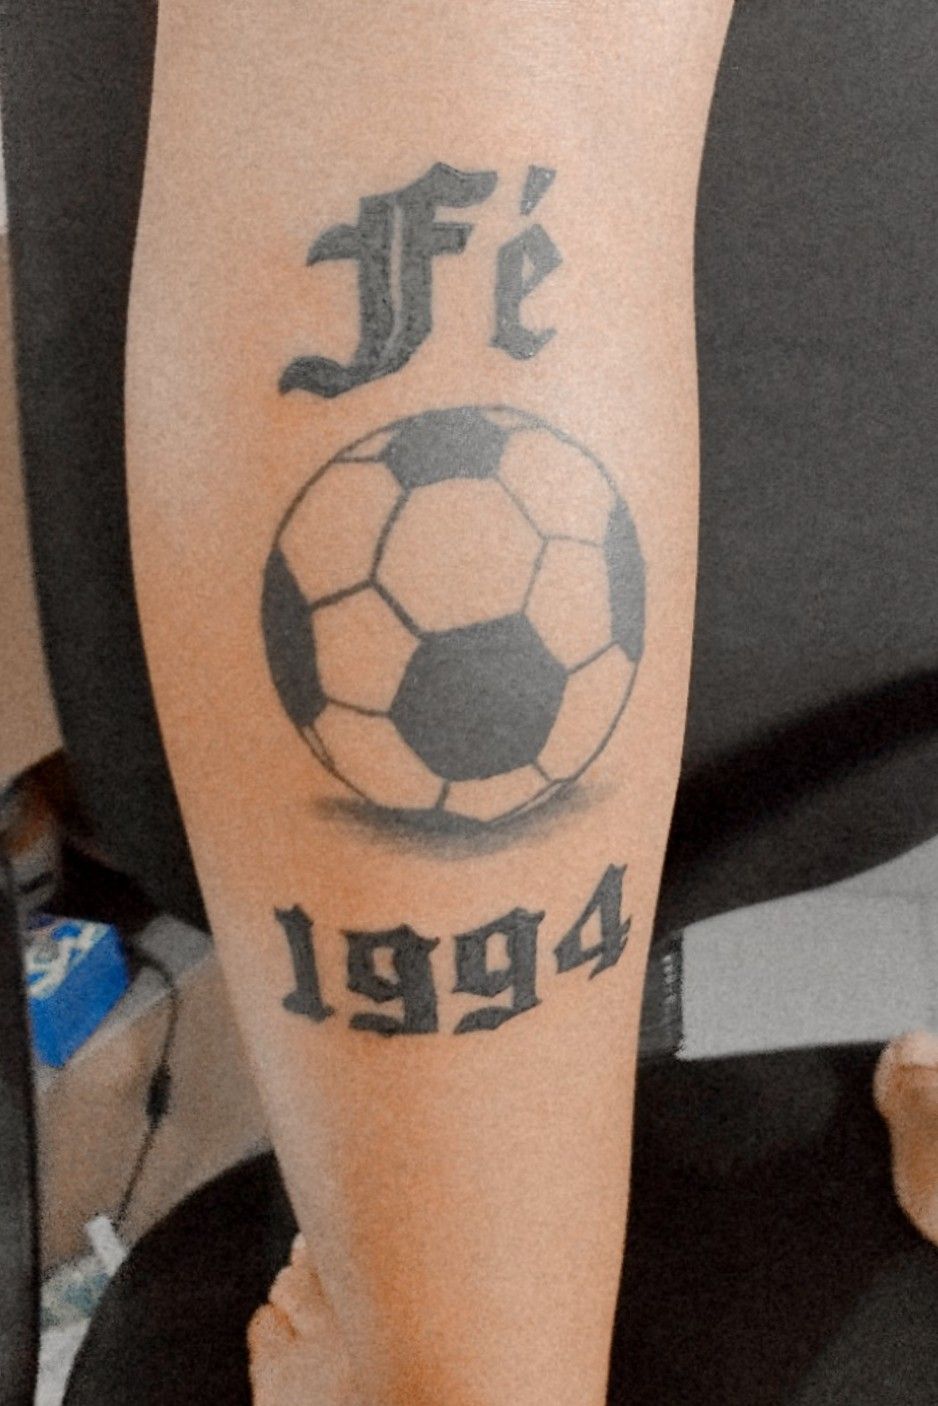 Football: The worst ever football inspired tattoos - Foto 16 de 24 | MARCA  English